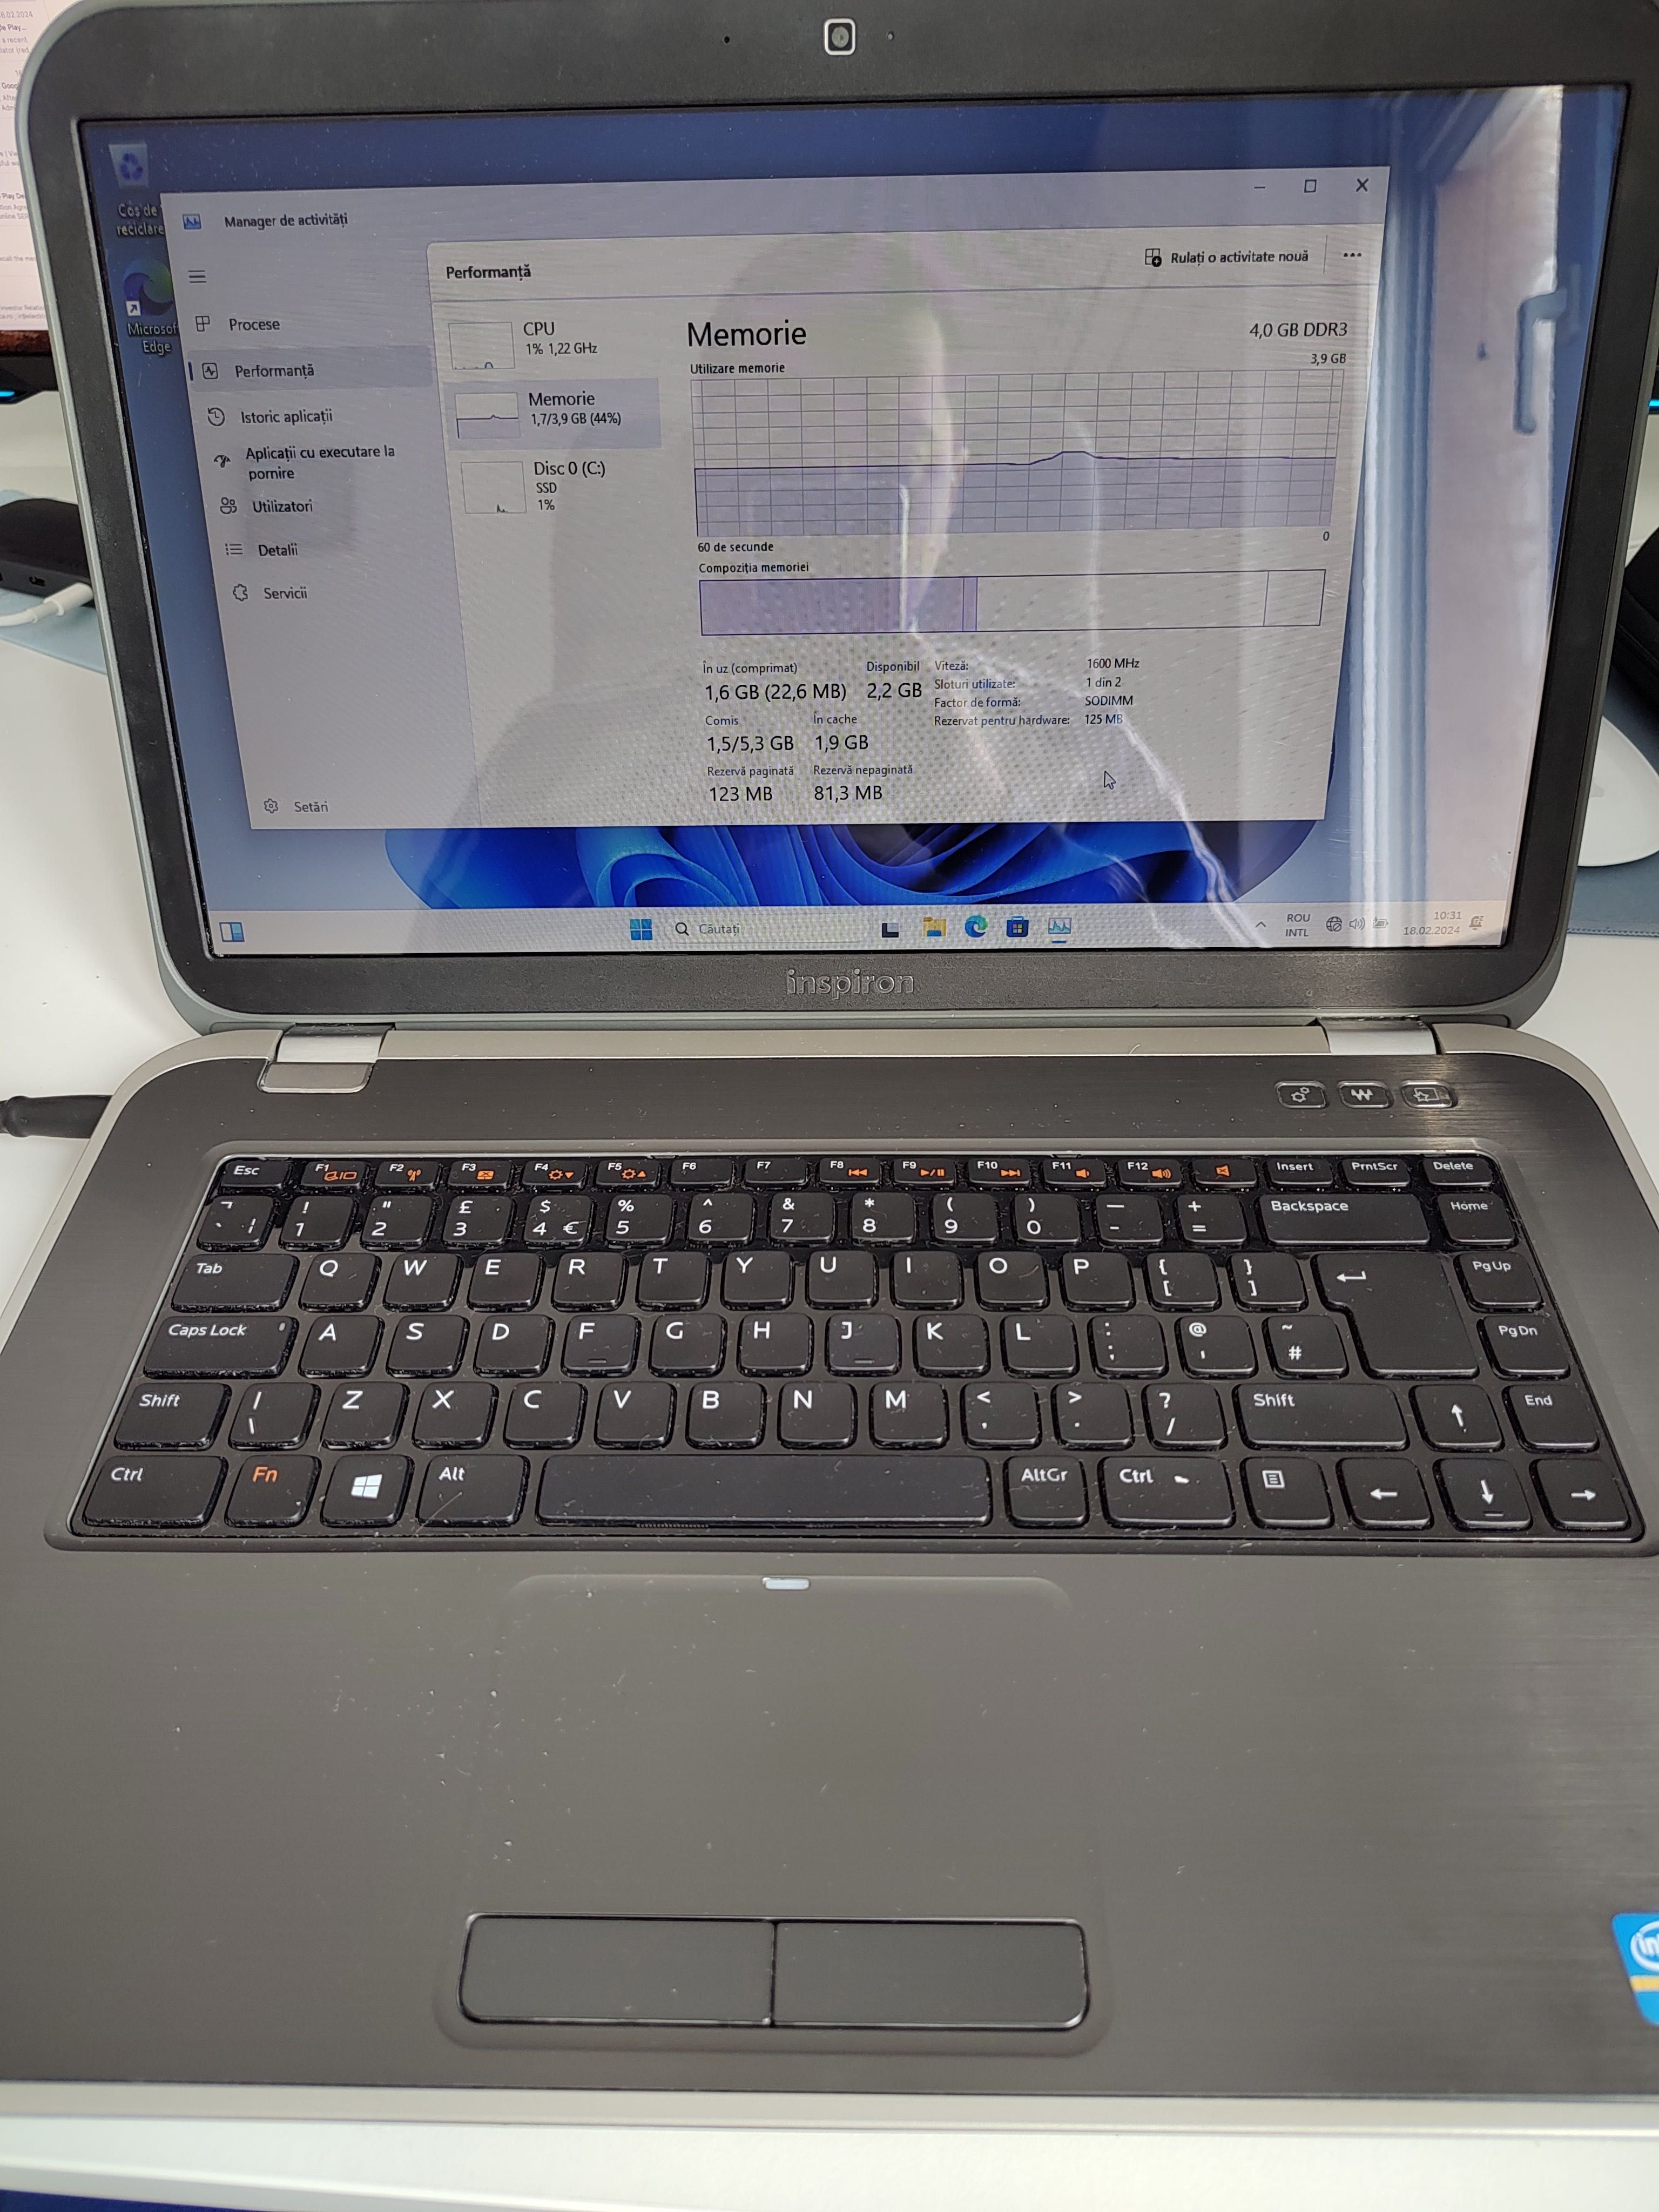 Laptop Inspiron 5520 i7, 4gb ram, 500gb ssd